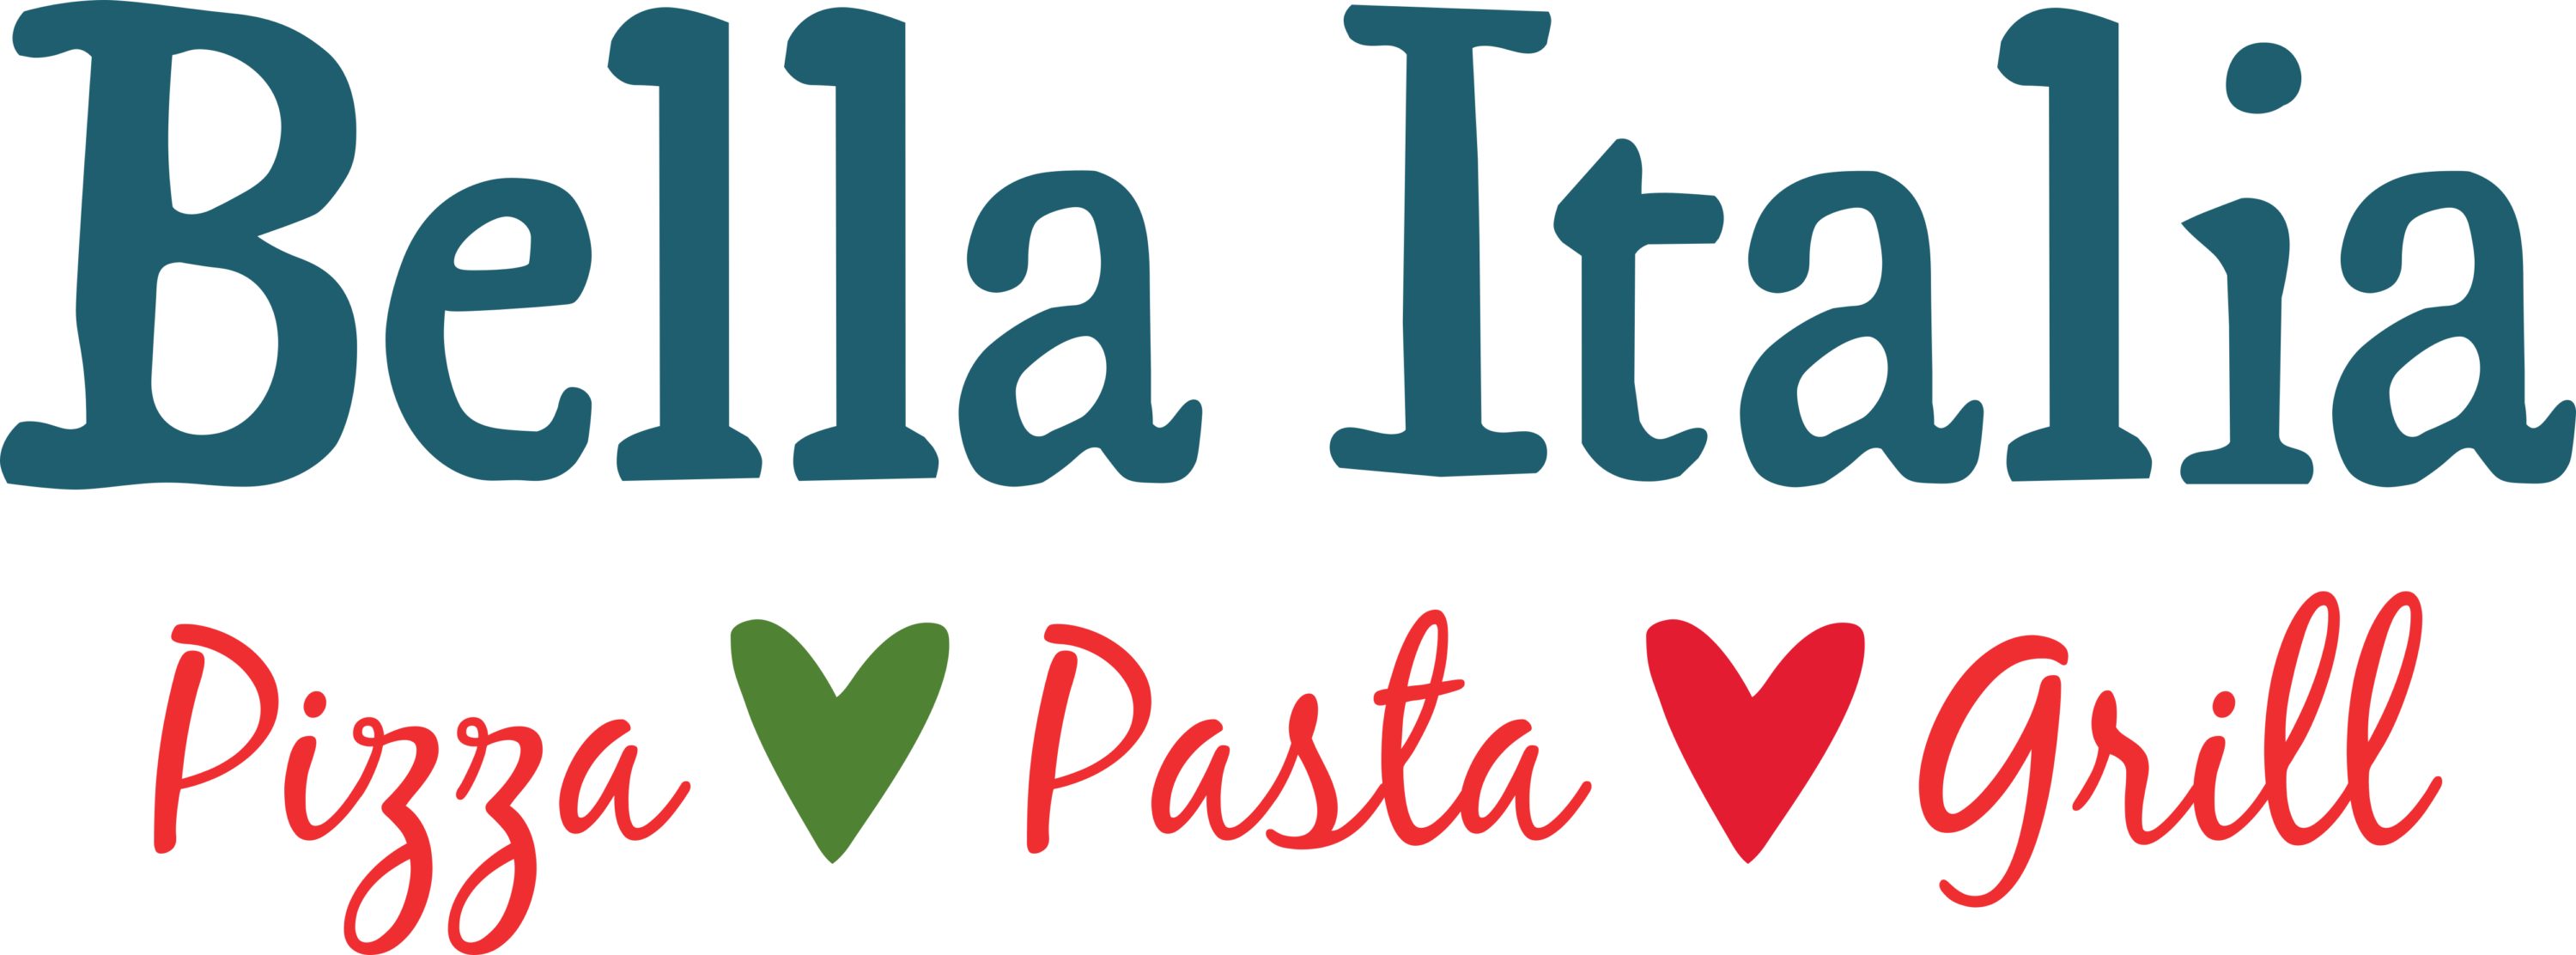 Bella Italia (Bella Pasta) Logo